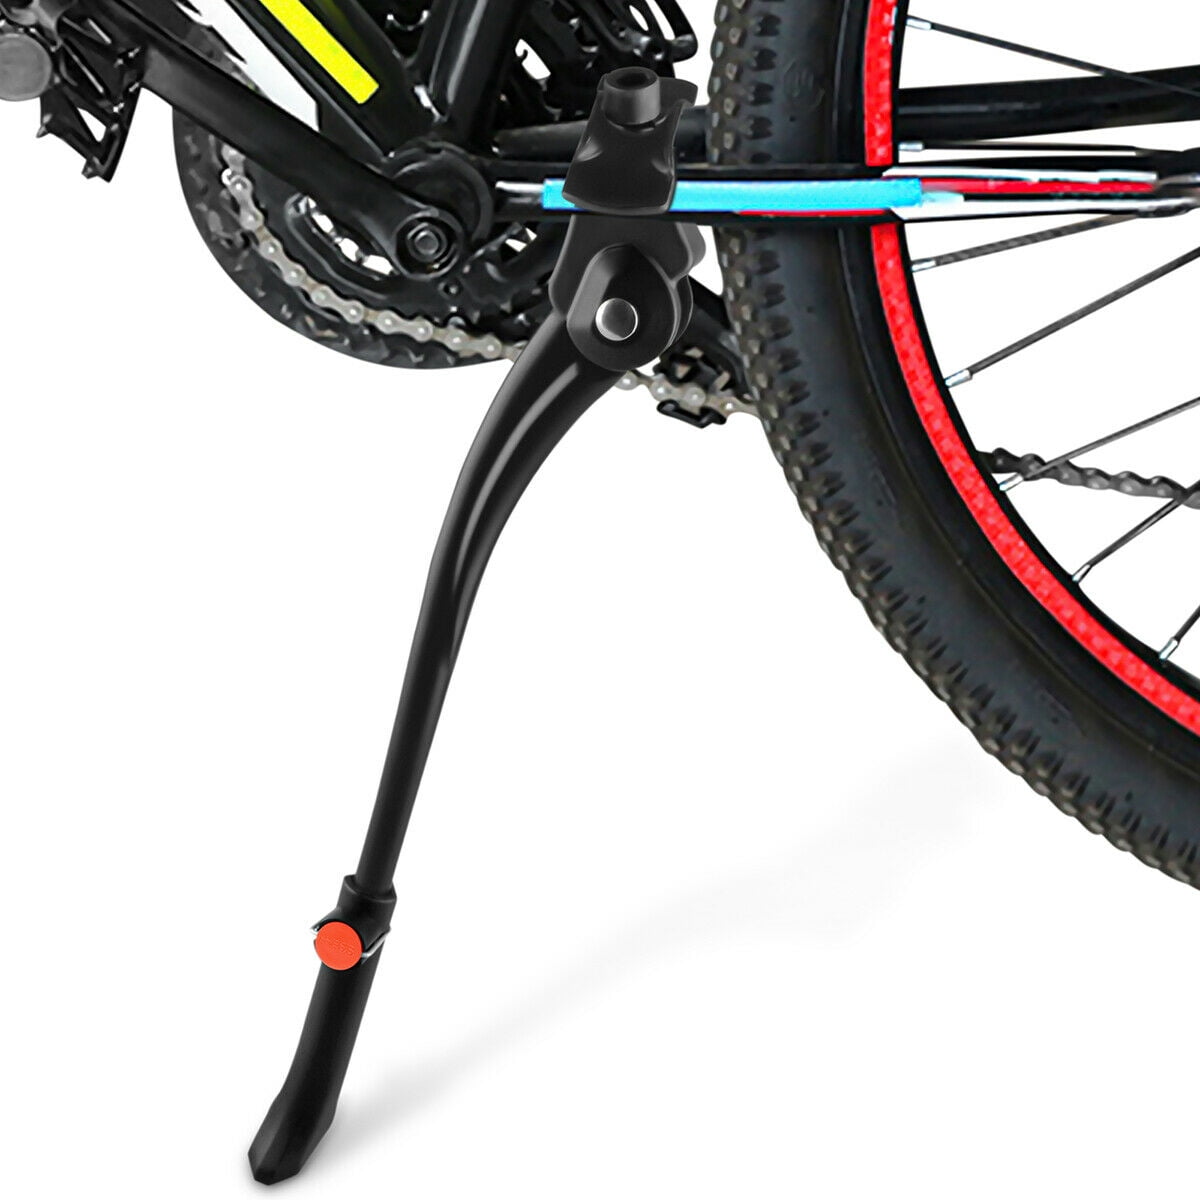 LIOOBO 16 Inch Bike Kickstand Bike Stand Single Sided Support for Kids Bike Mountain Road Bike Accessories City Bike Sports Bike